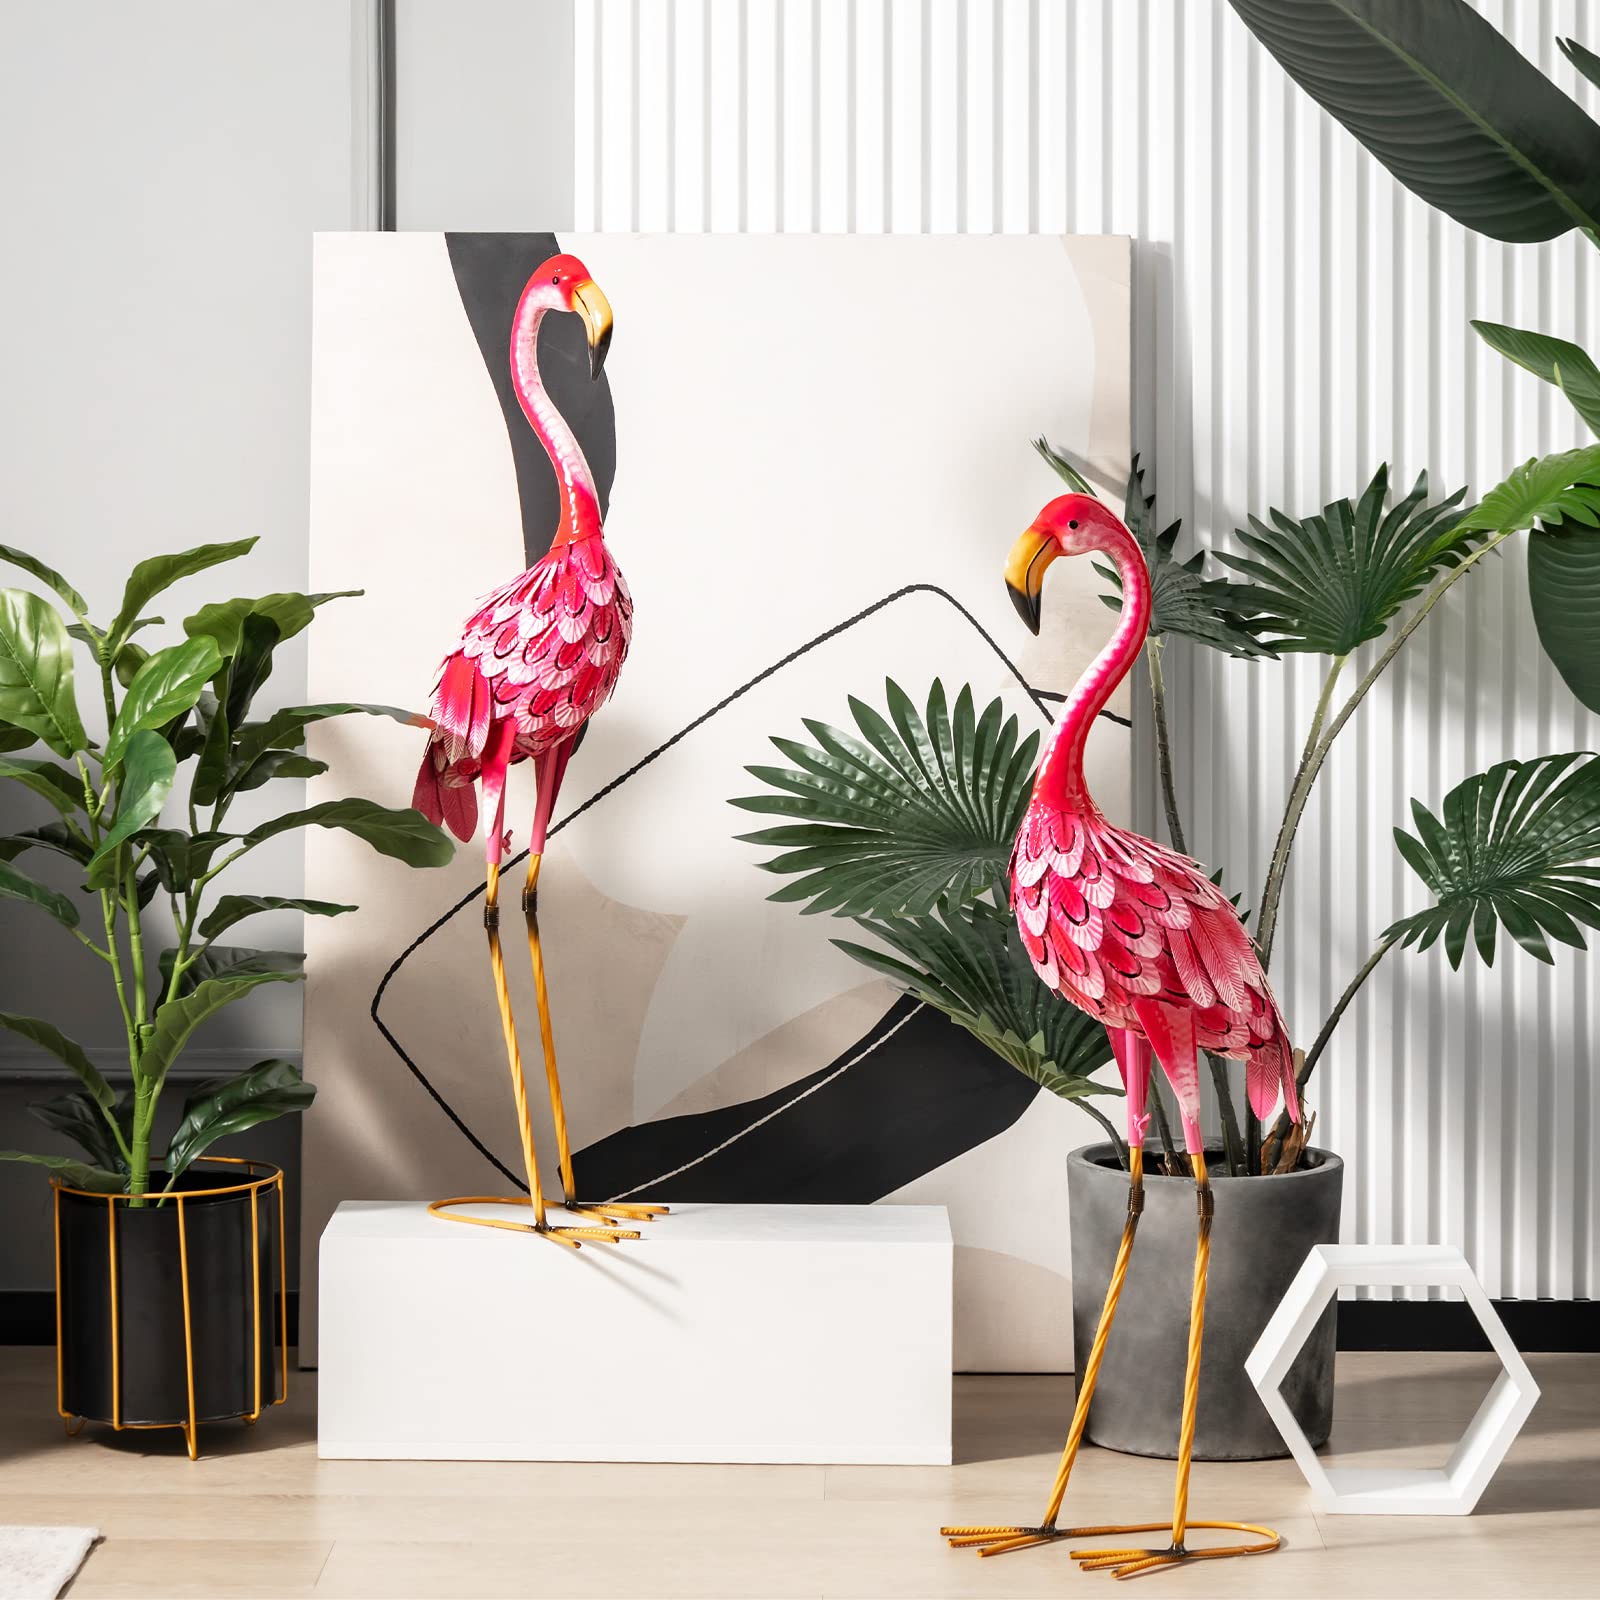 Giantex Flamingo Garden Statues Set of 2